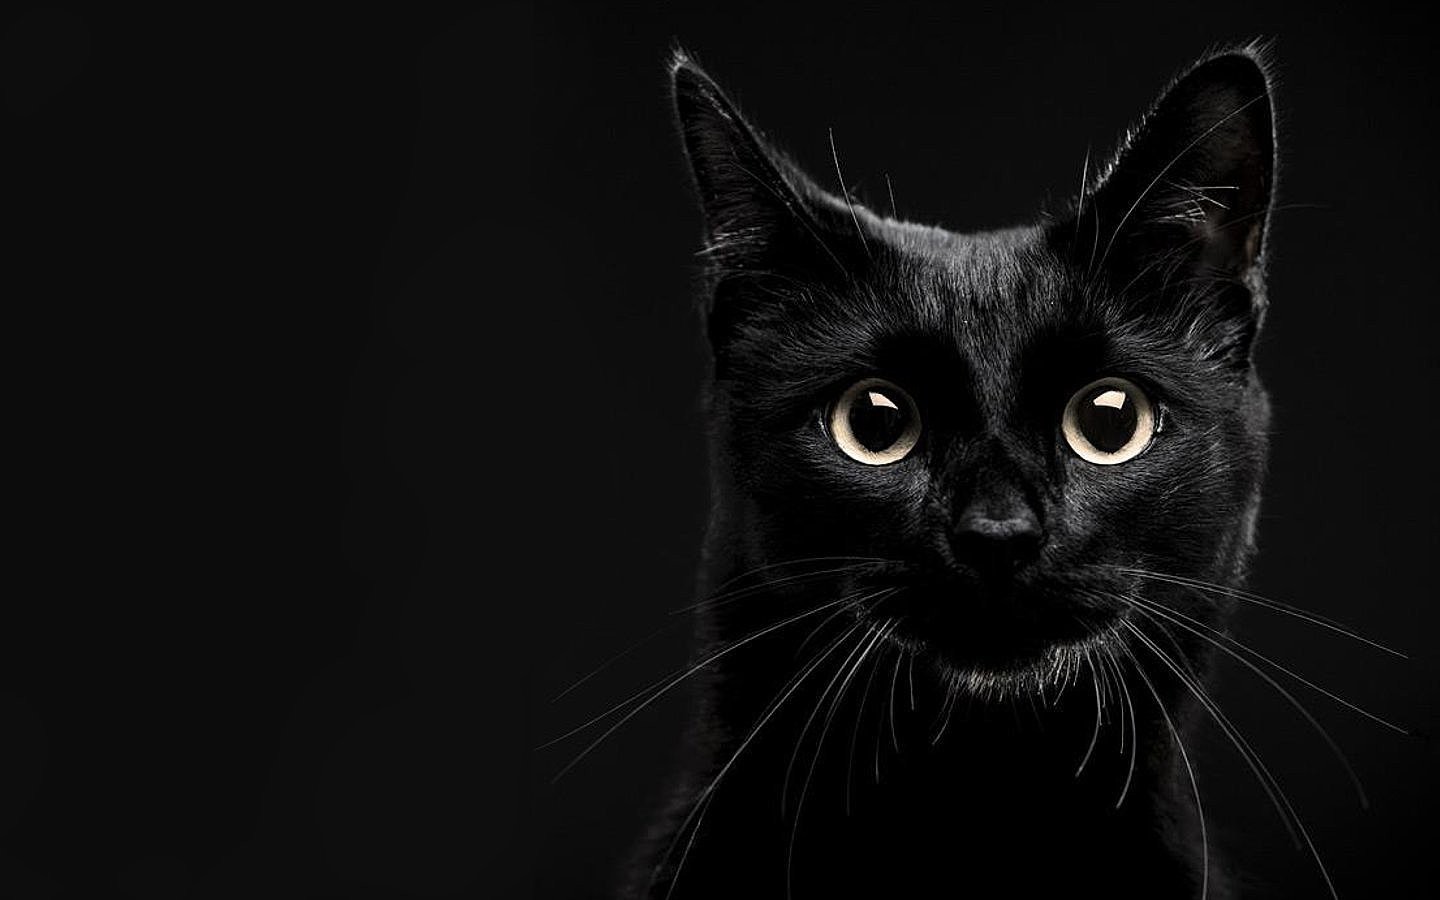 Beautiful Black Cat - Cats Wallpaper (41100577) - Fanpop